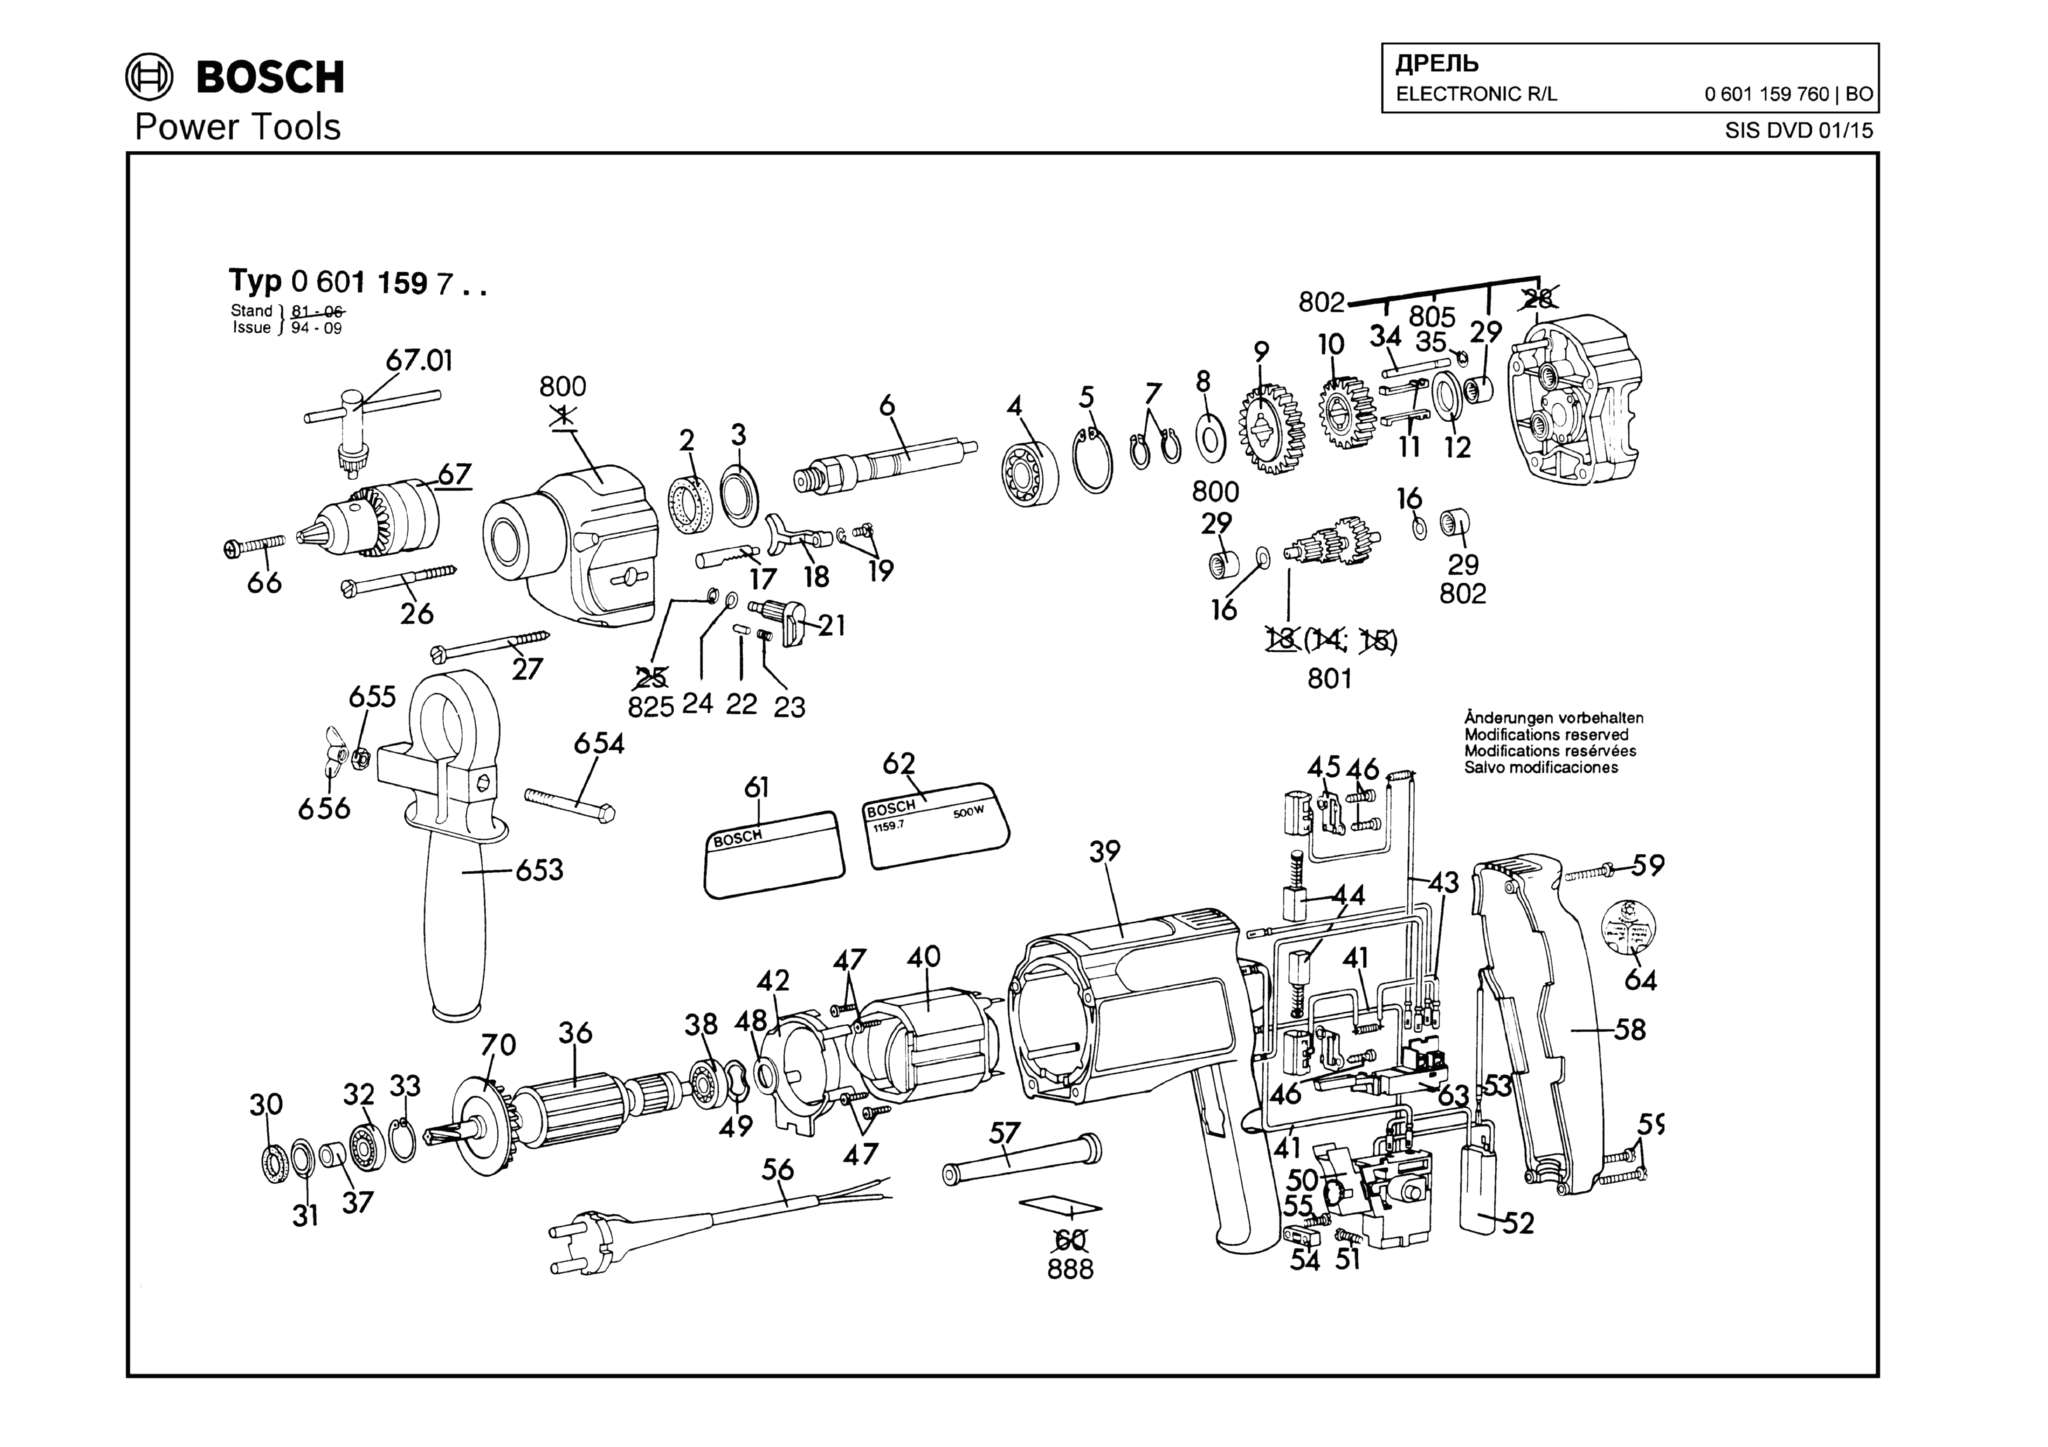 Запчасти, схема и деталировка Bosch ELECTRONIC R/L (ТИП 0601159760)